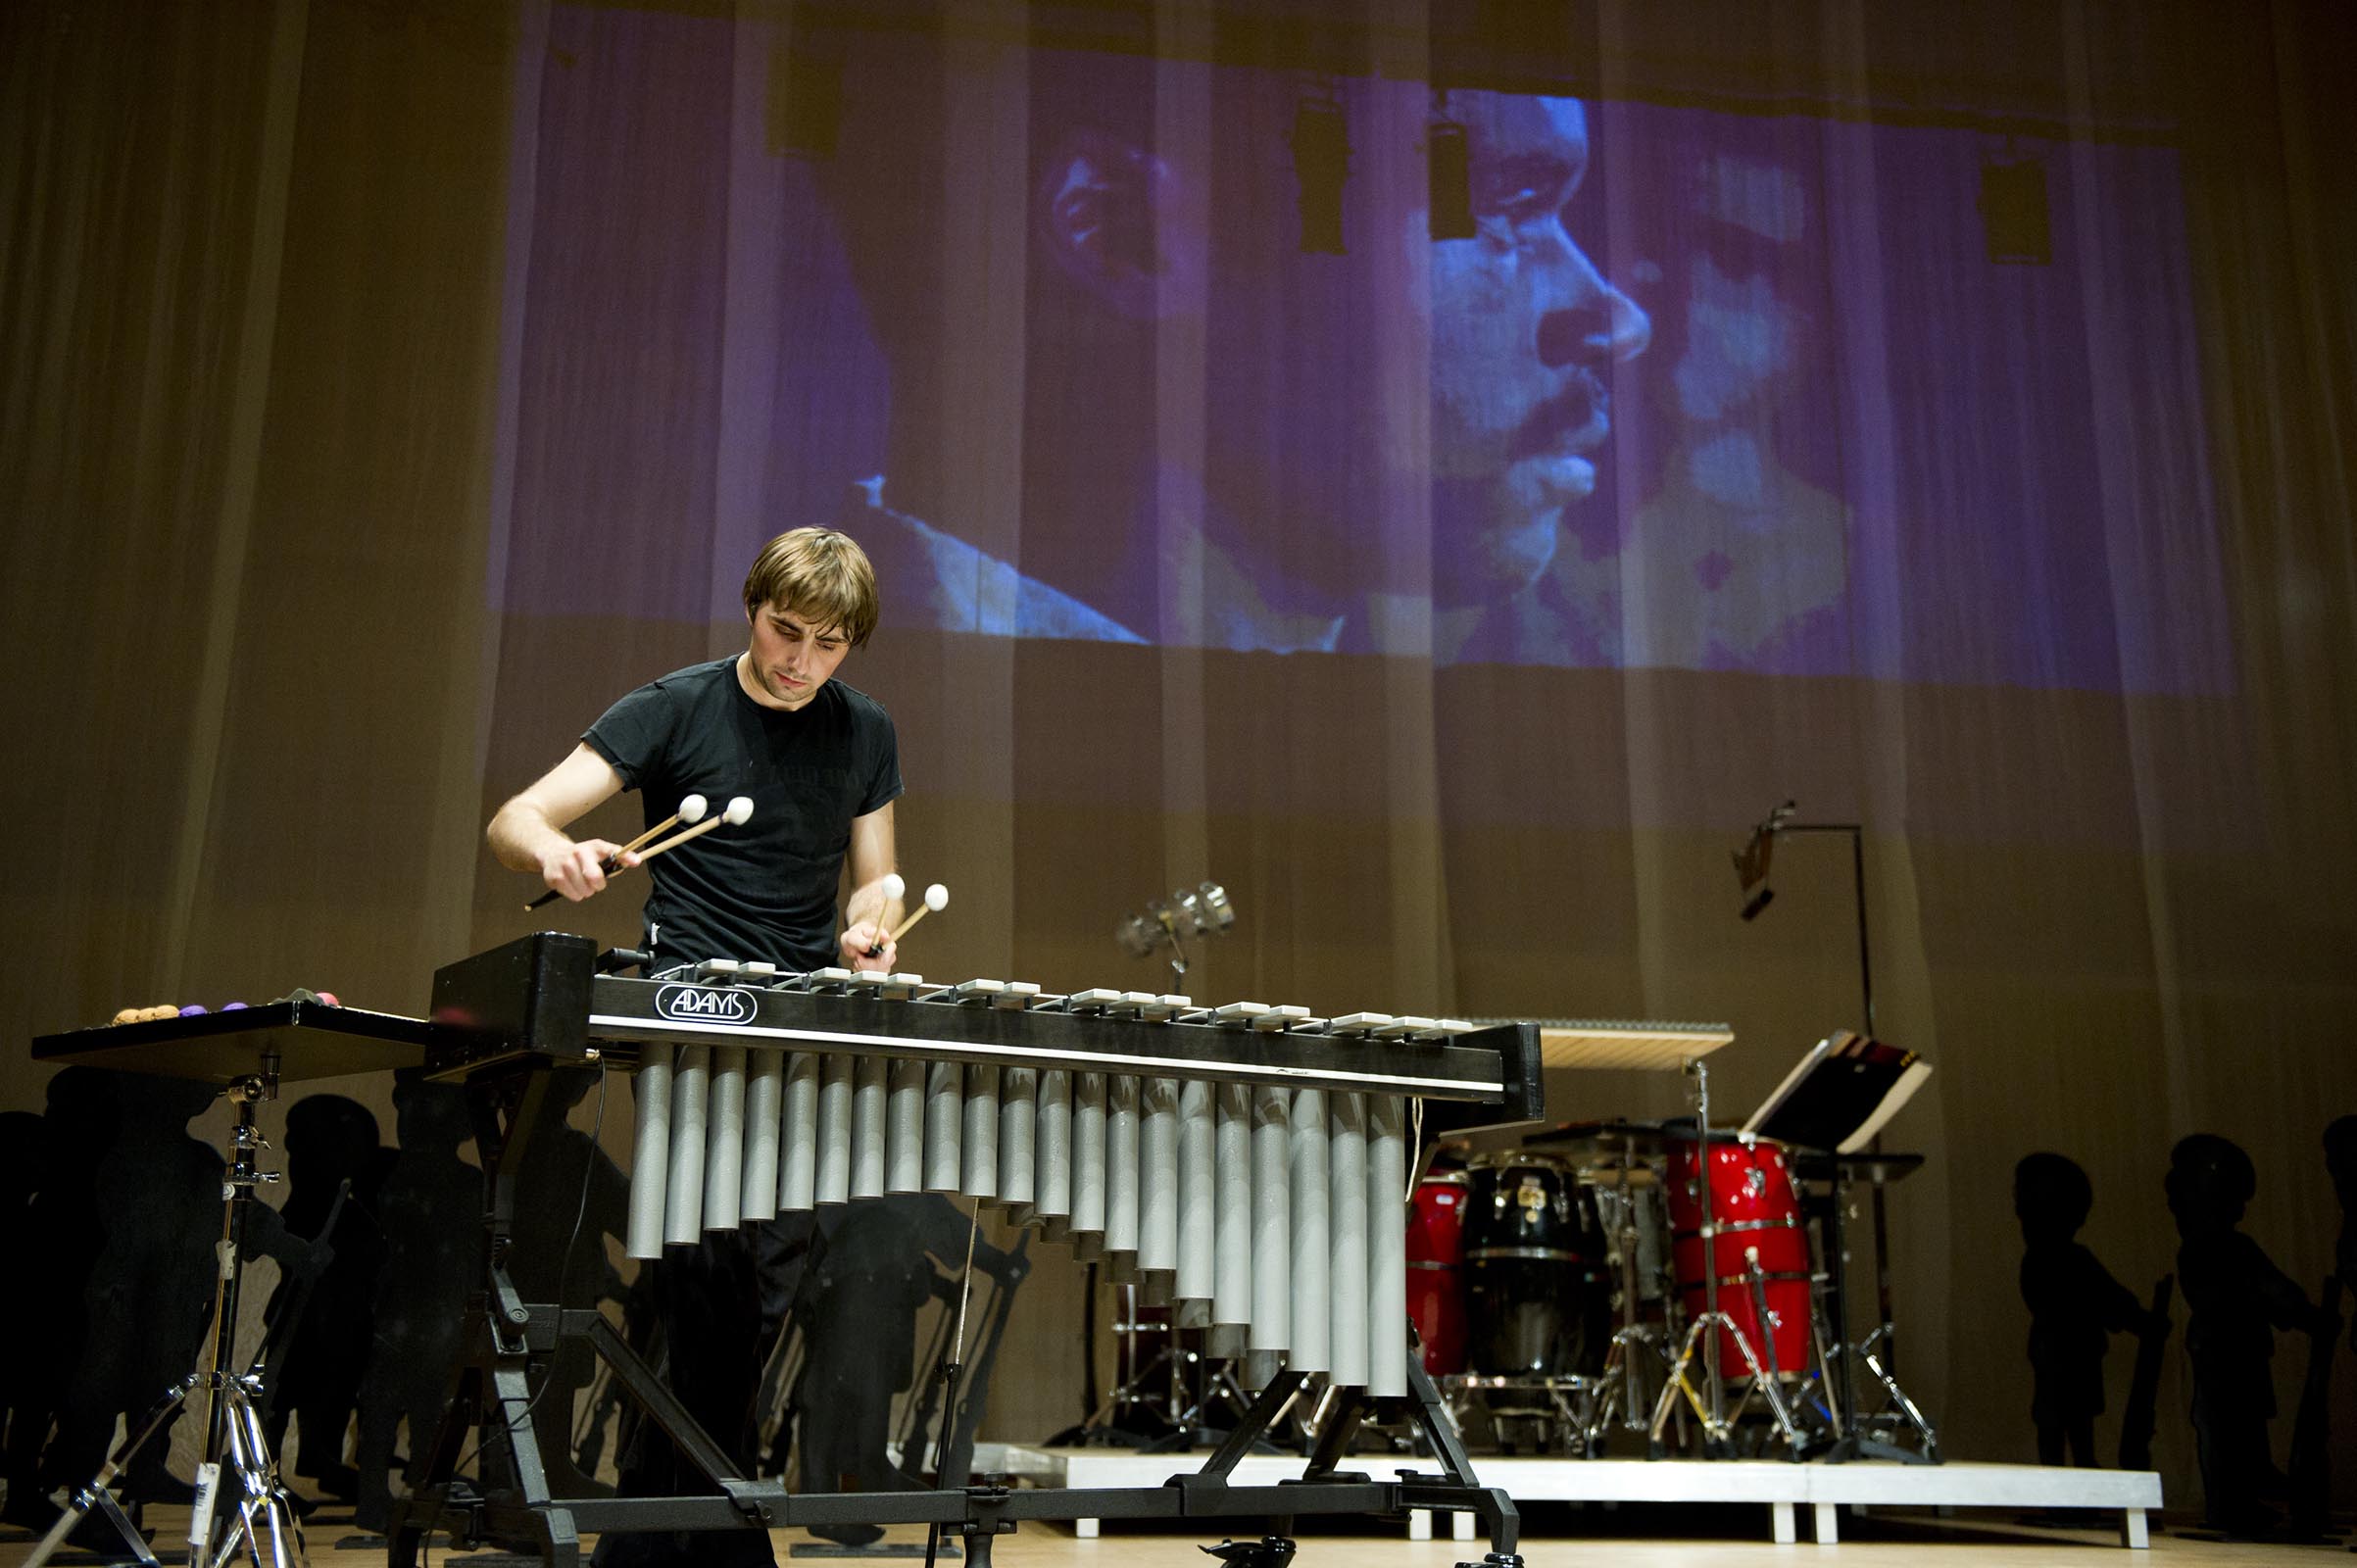 Dominique Vleeshouwers playing vibraphone with Kindsoldaat film